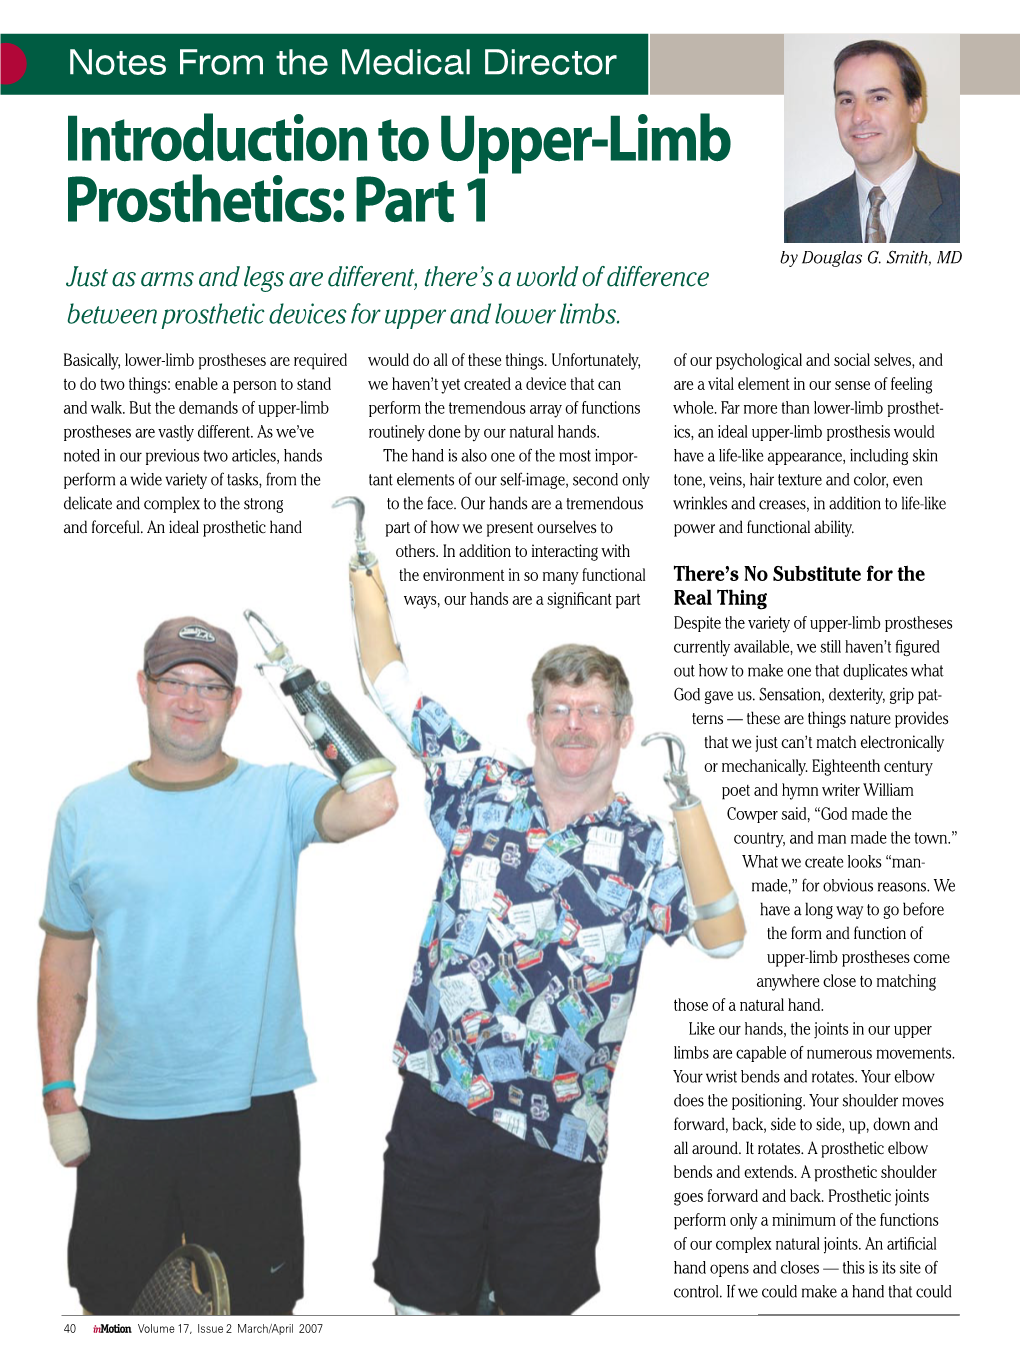 Introduction to Upper-Limb Prosthetics: Part 1 by Douglas G